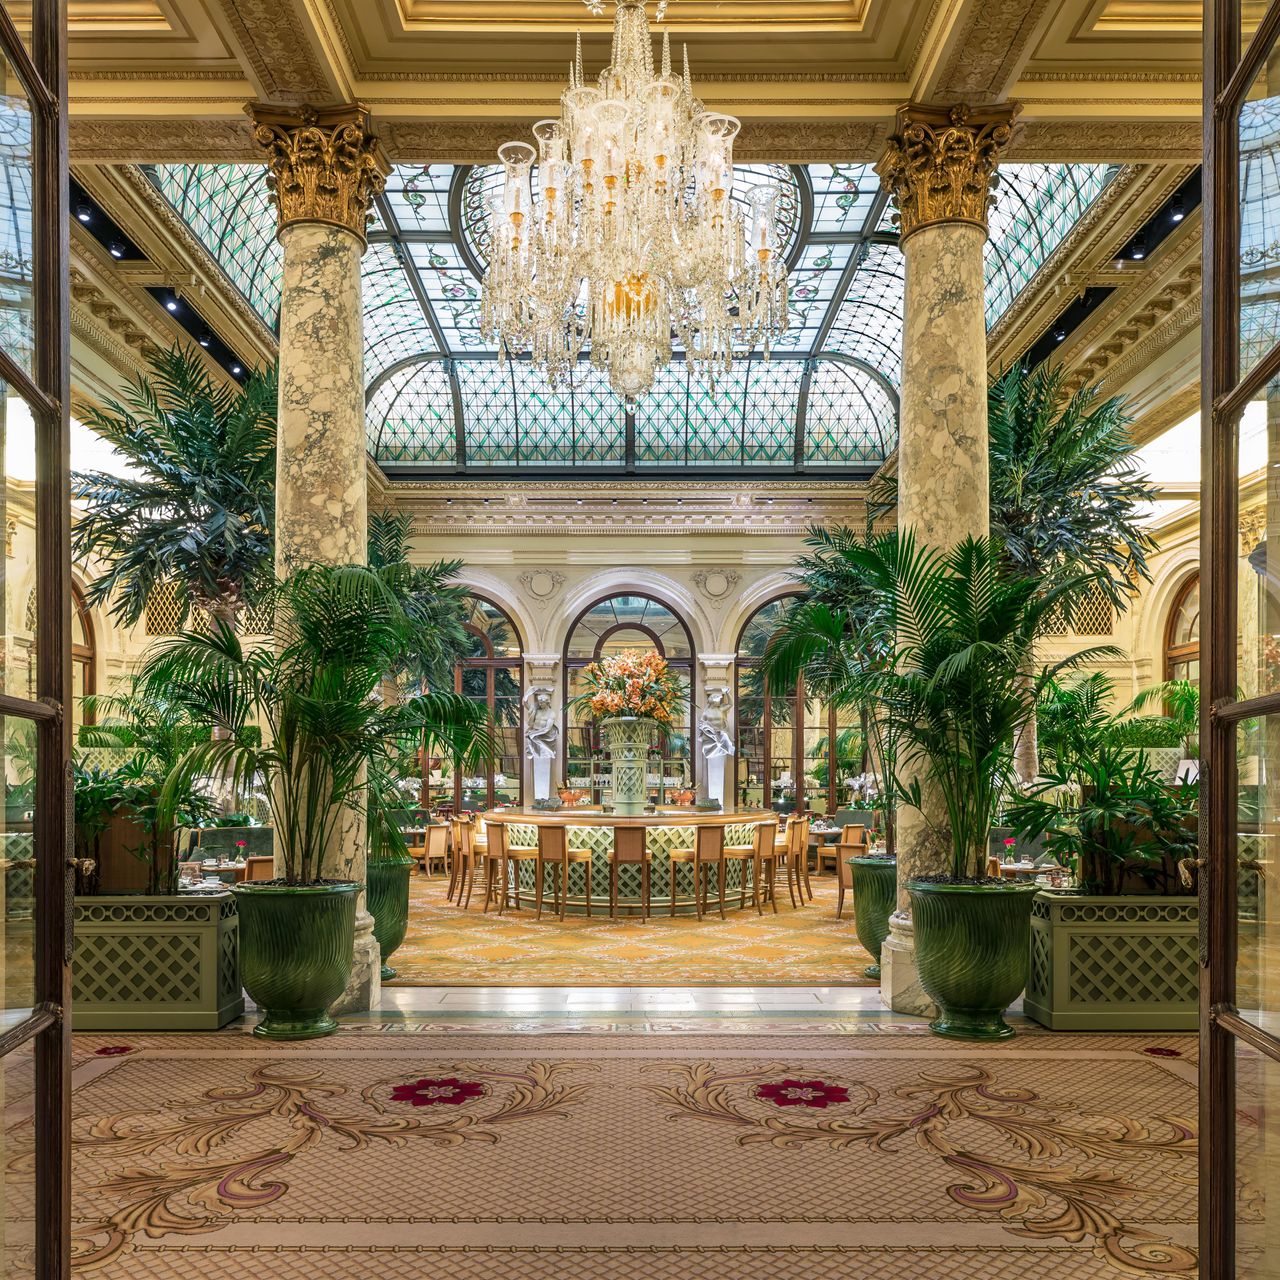 The Palm Court at The Plaza Hotel Restaurant - New York, NY